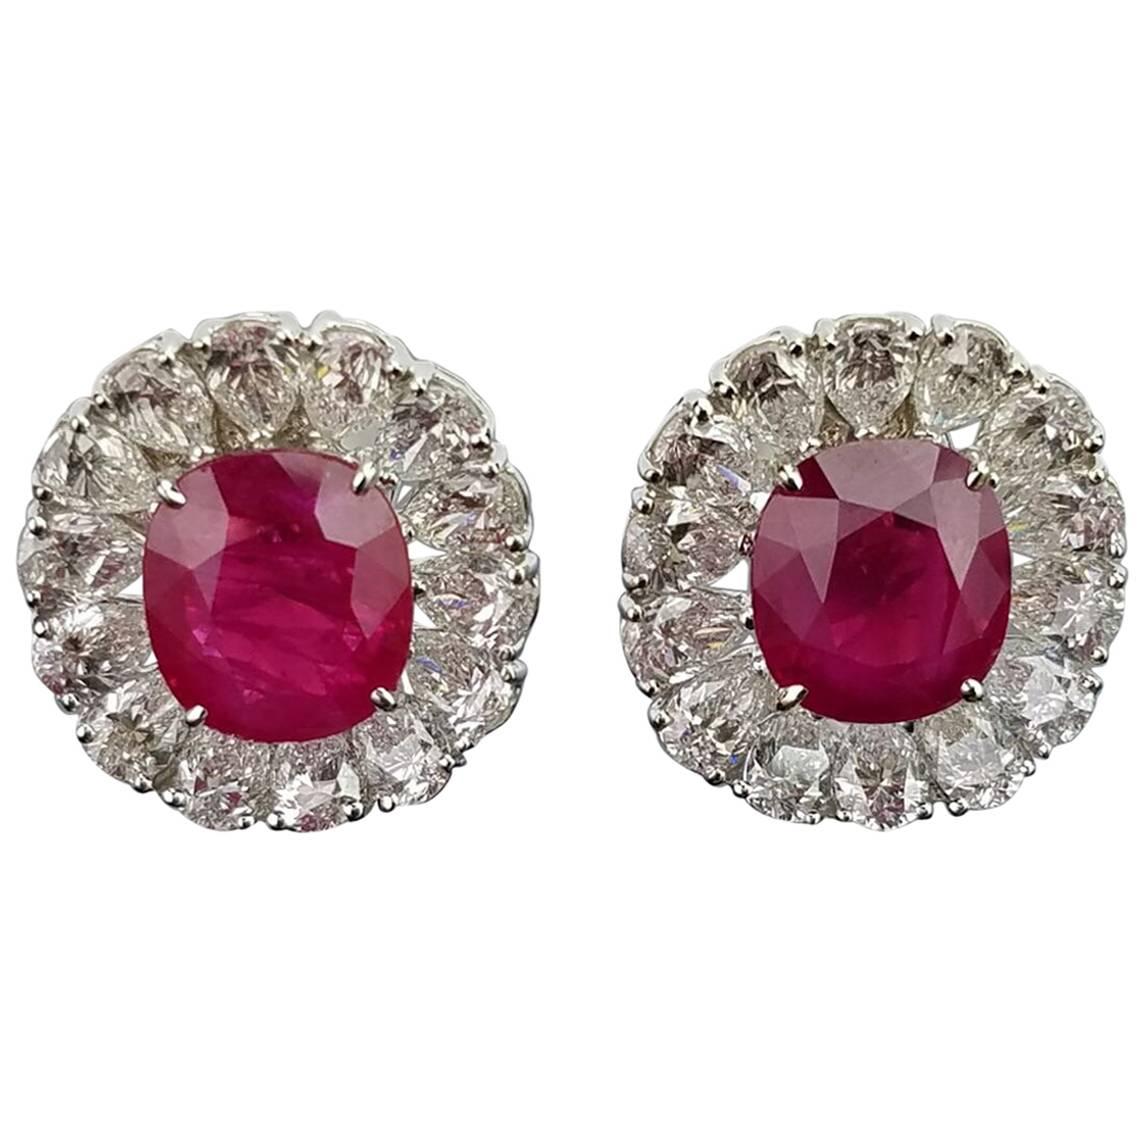 Certified 8.11 Carat Burma Ruby and Diamond Studs Earring